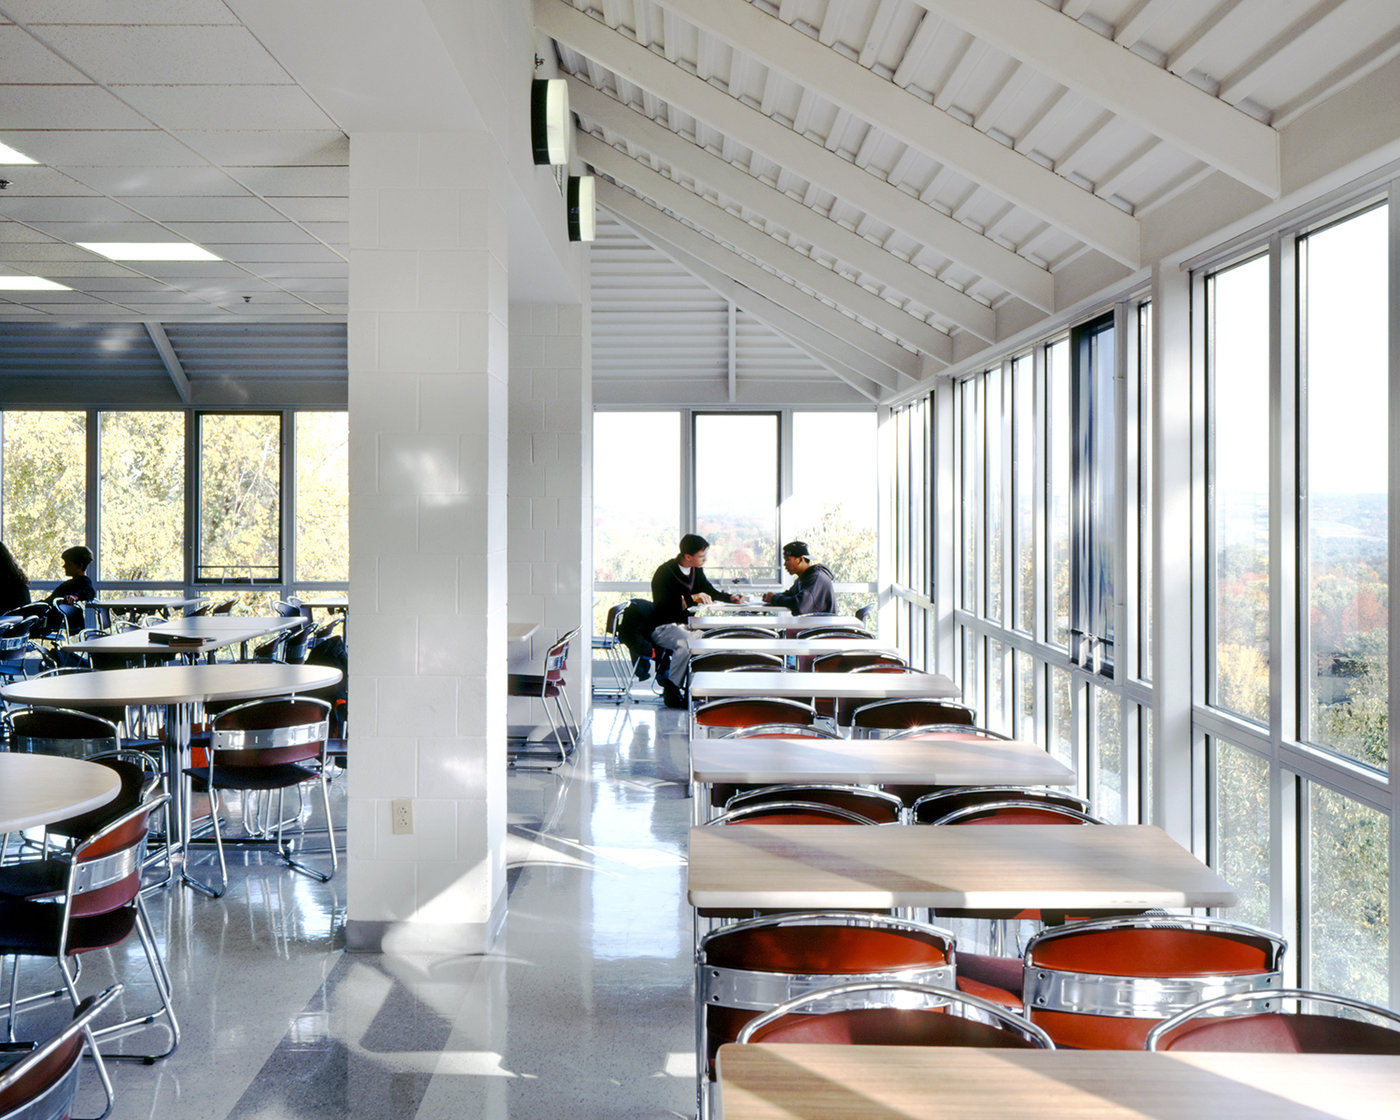 10 tskp woodstock academy master plan expansion interior detail cafeteria 1400 xxx q85